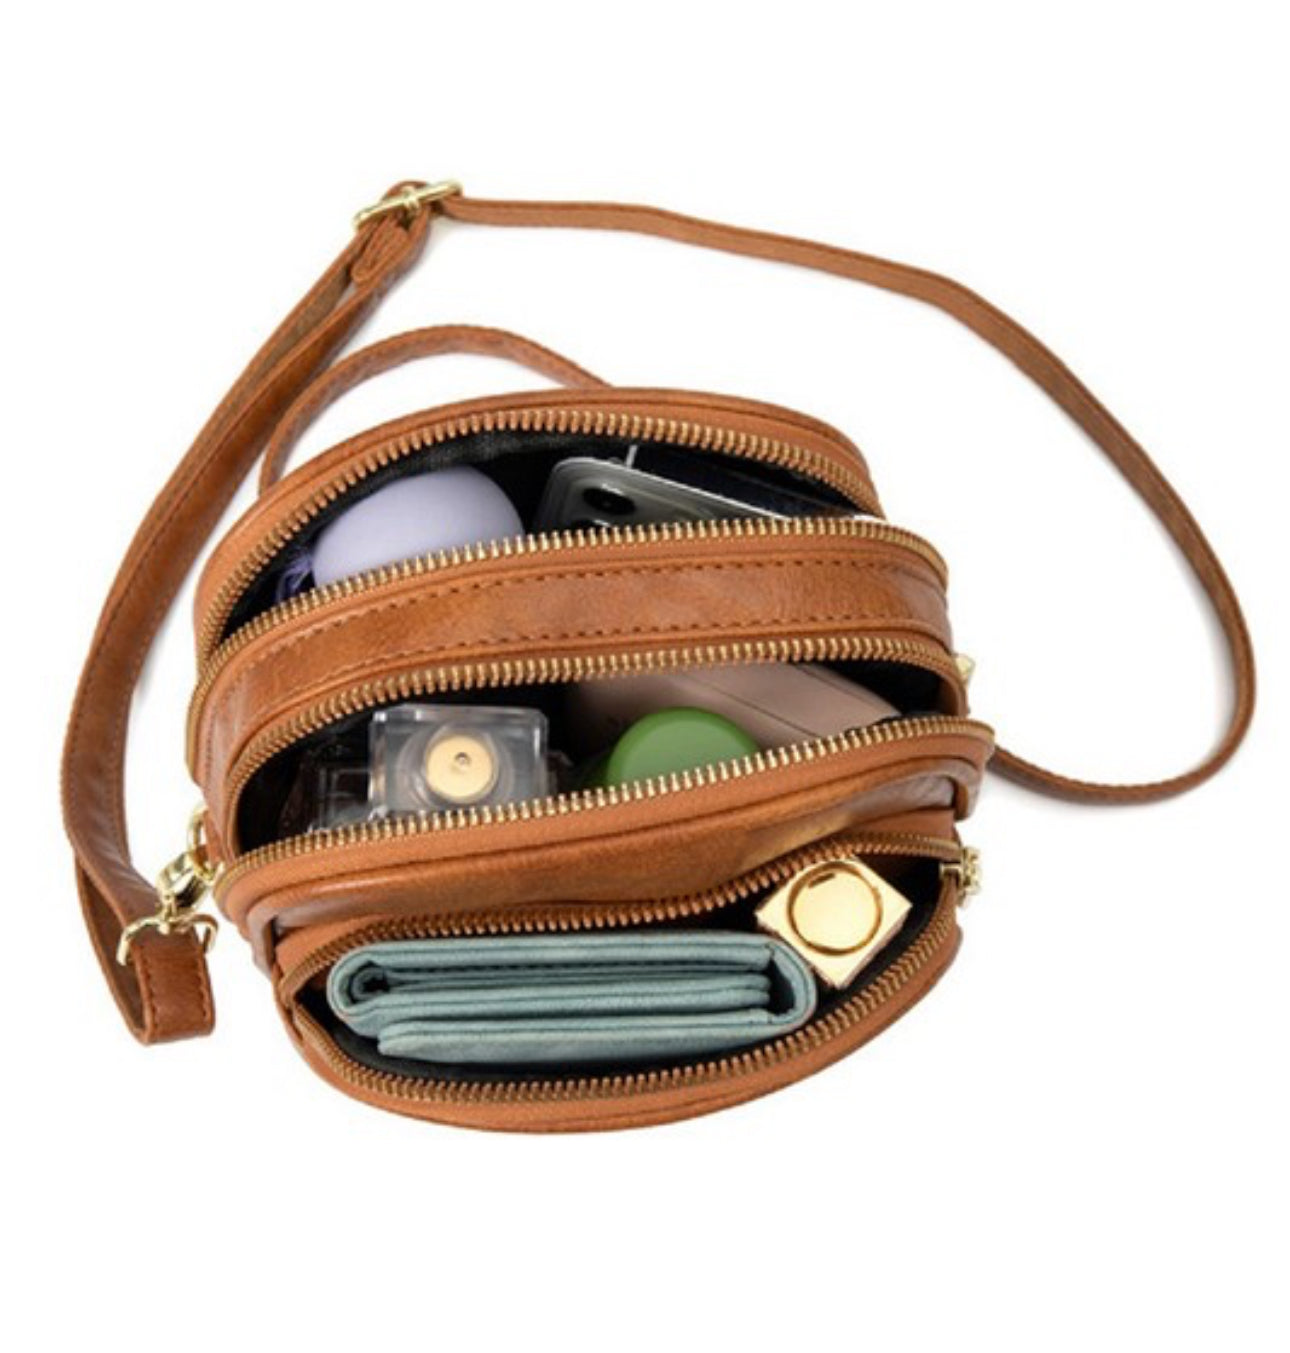 The Travel Crossbody Bag (2 colors)